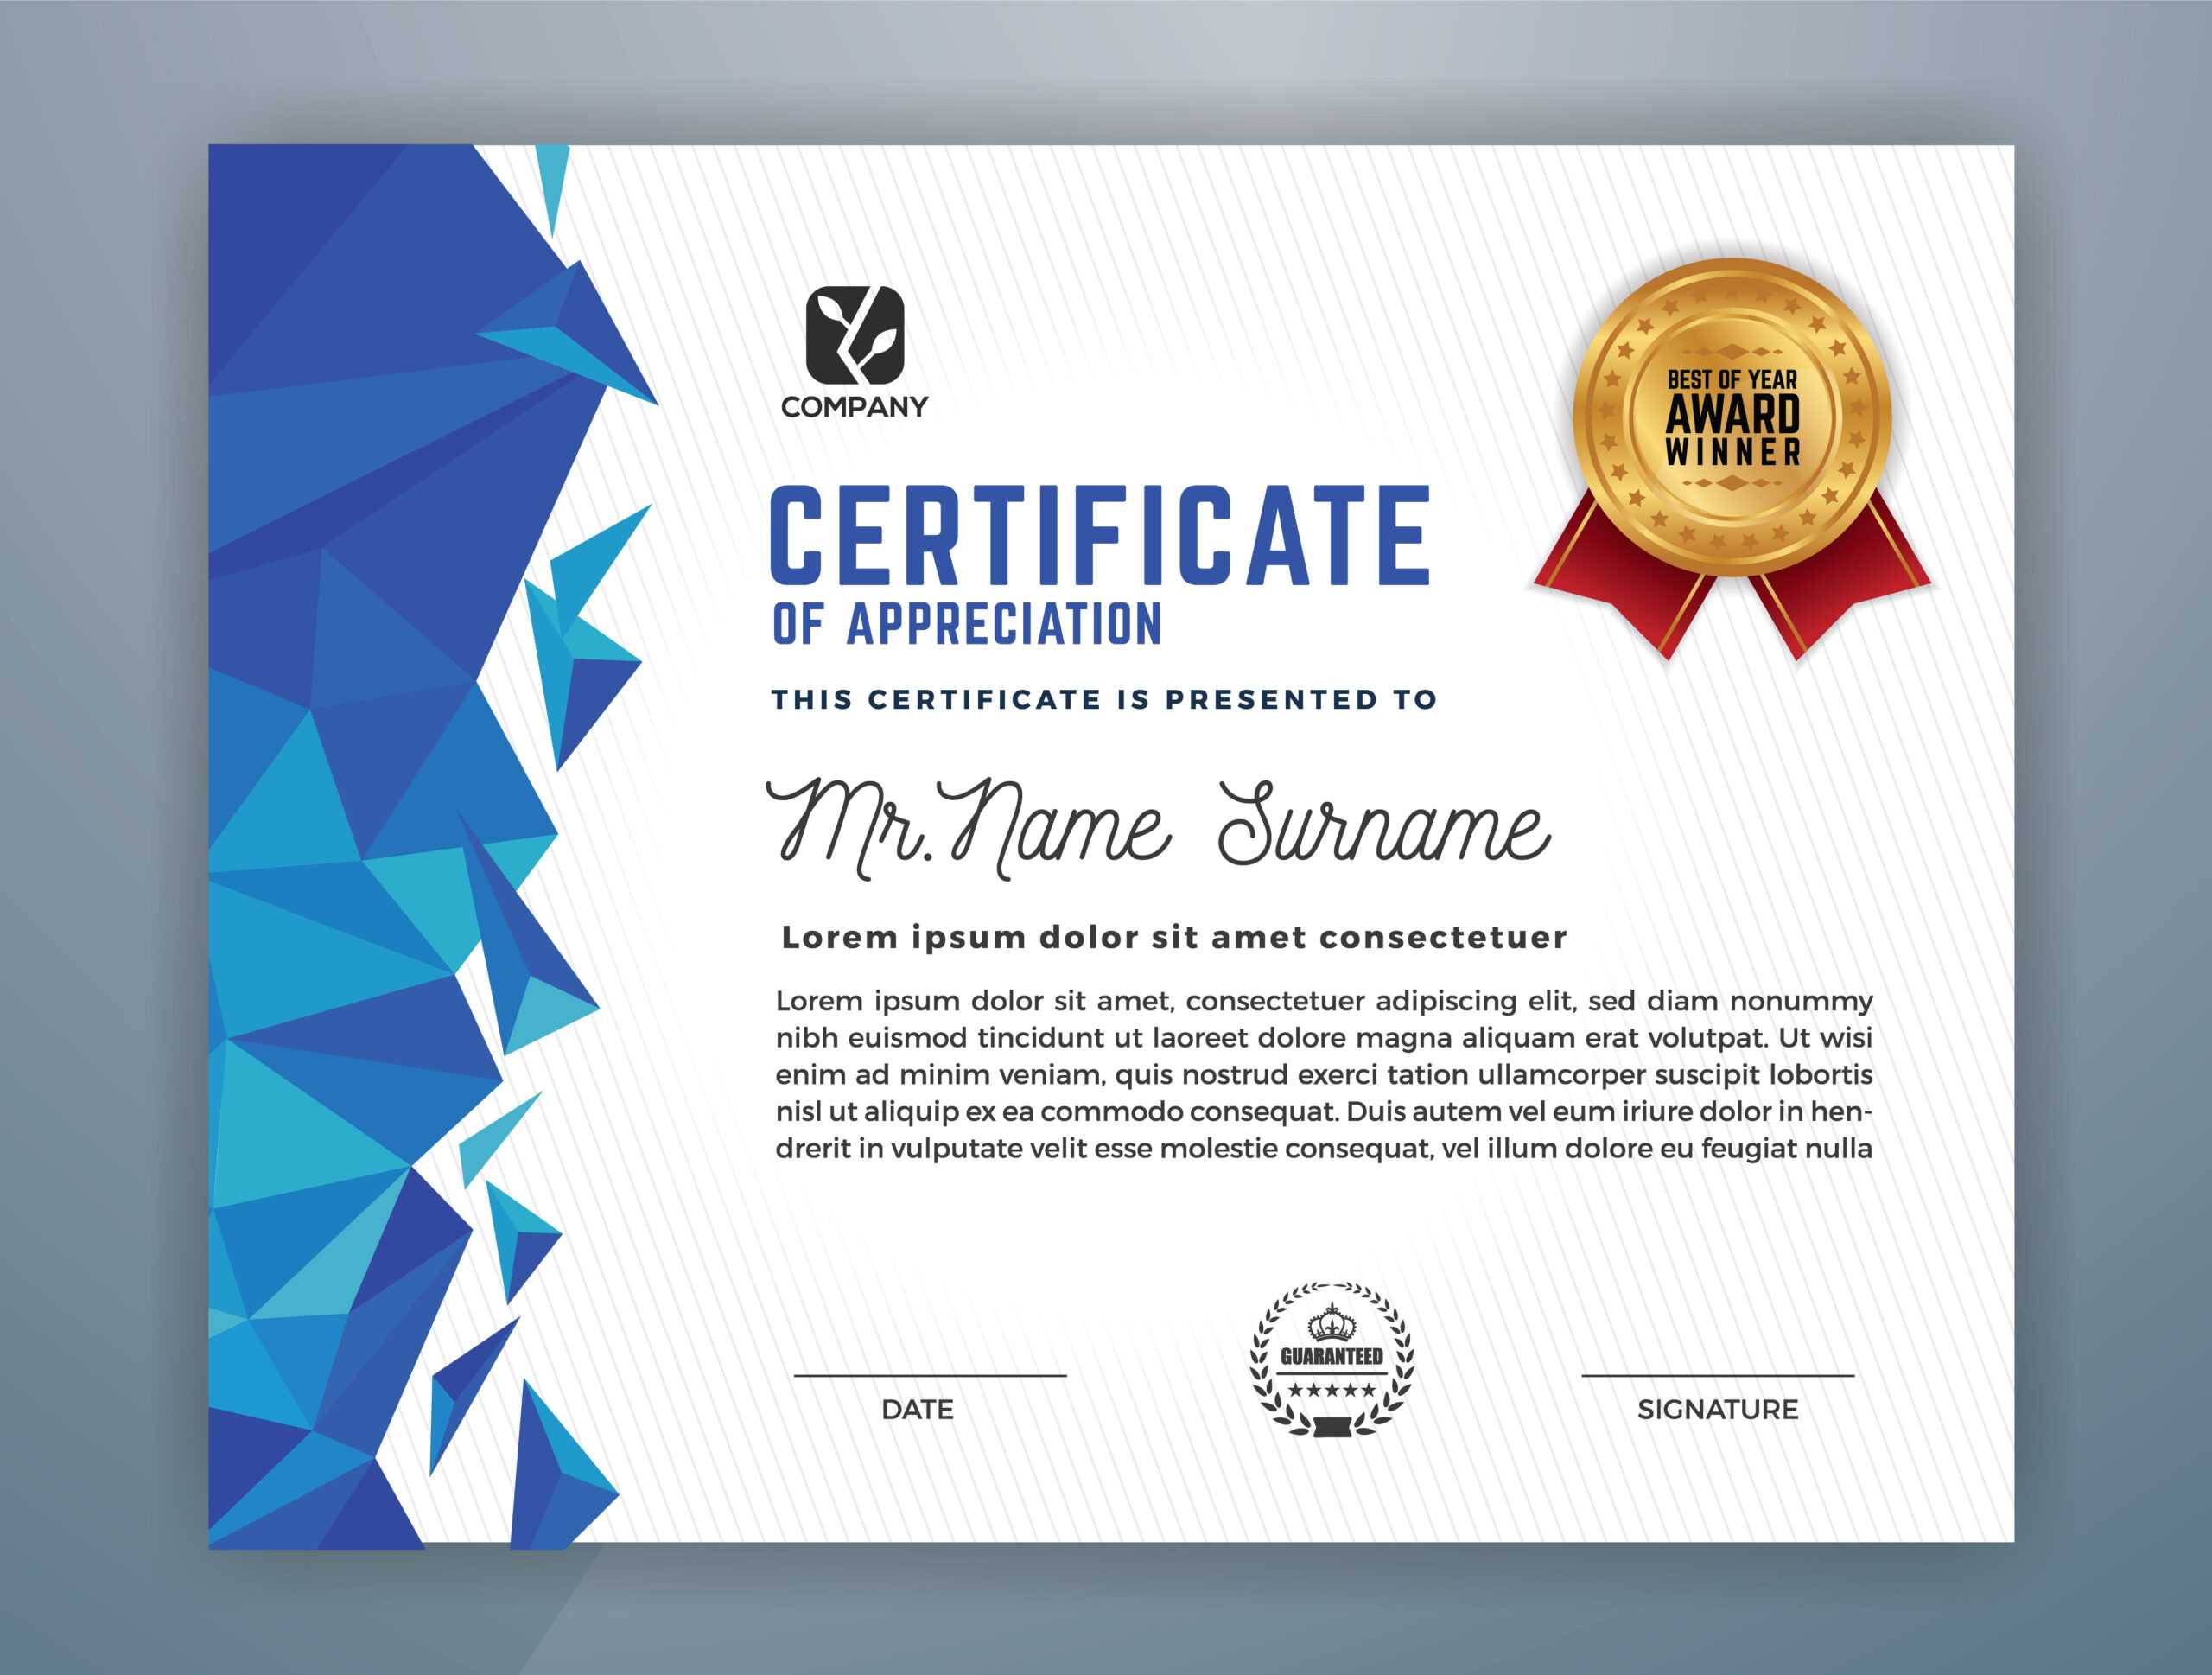 Multipurpose Professional Certificate Template Design With Regard To Design A Certificate Template